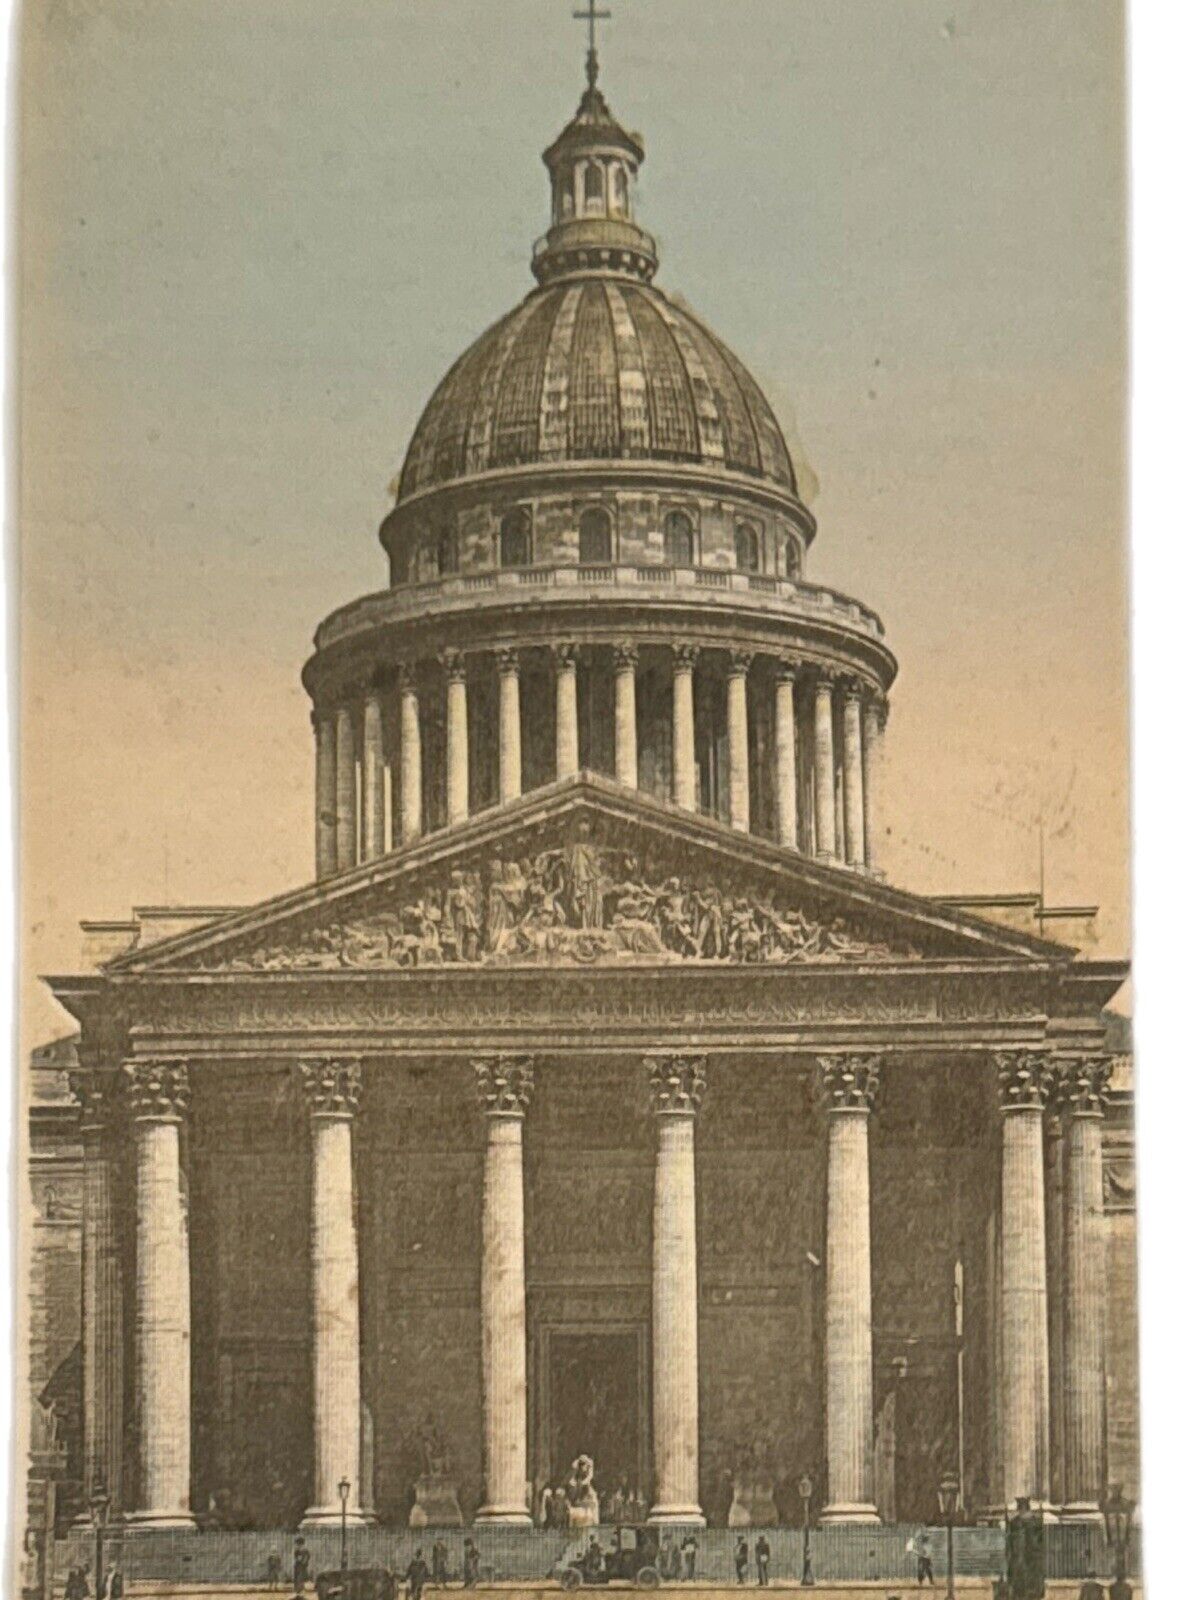 Atq Early 1900s Litho Postcard Carte Postale No 41 Paris FR The Pantheon EUC See